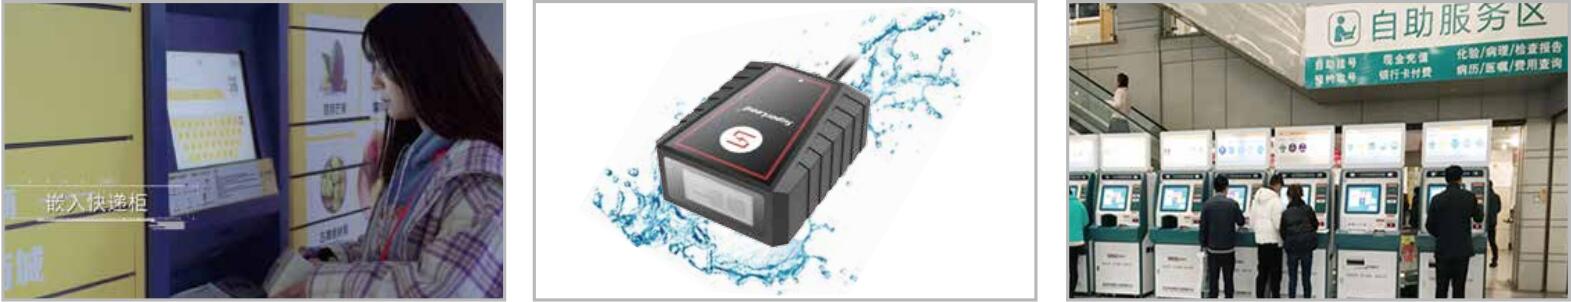 Superlead 4108wp Ip54 Water Proof 2D Barcode Reader Qr Code Reader